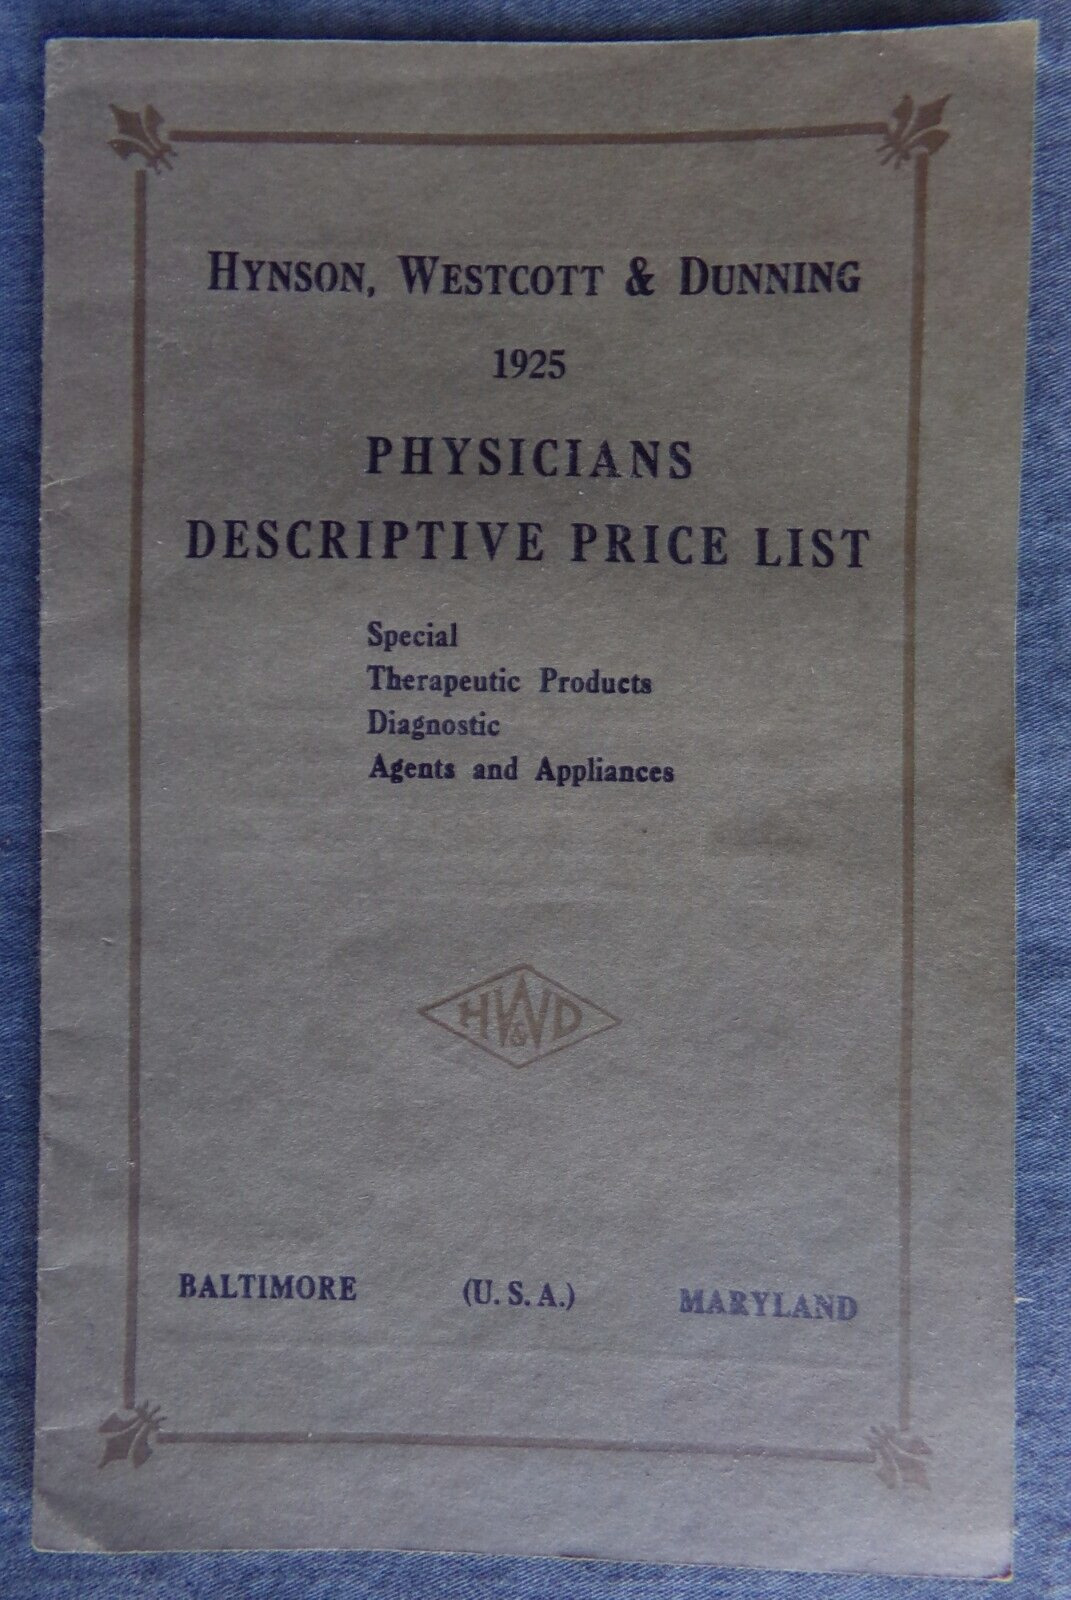 1925 HW&D Hynson, Westcott & Dunning Physicians Descriptive Price List - Drugs